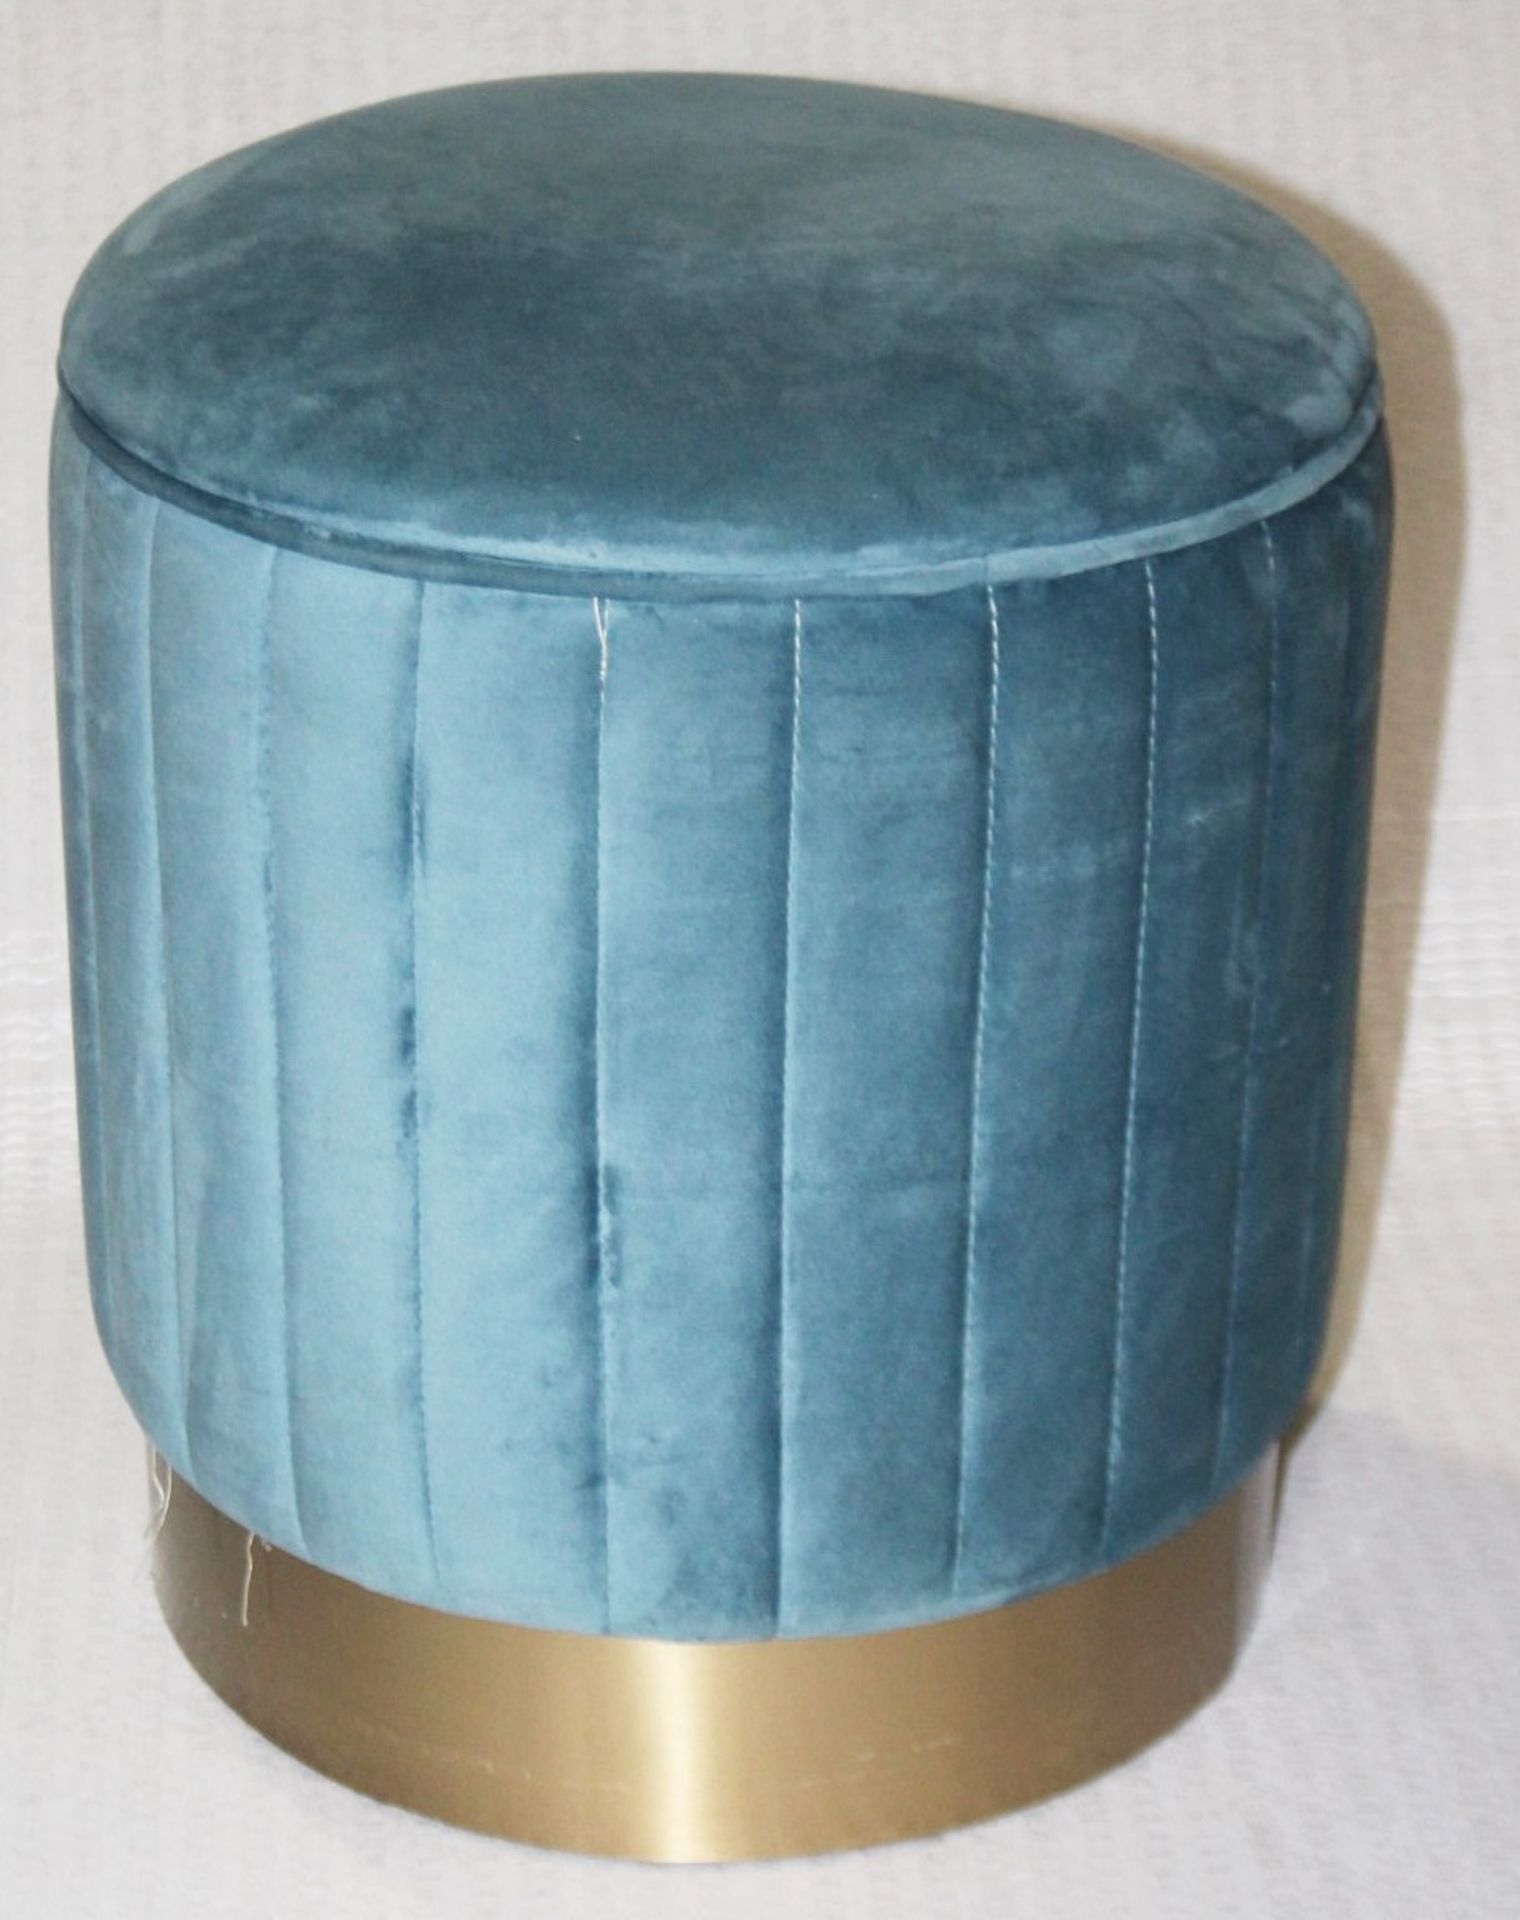 1 x EICHHOLTZ 'Allegra' Luxury Teal Velvet Vanity Stool, With A Brass Base - Original Price £850.00 - Image 2 of 7